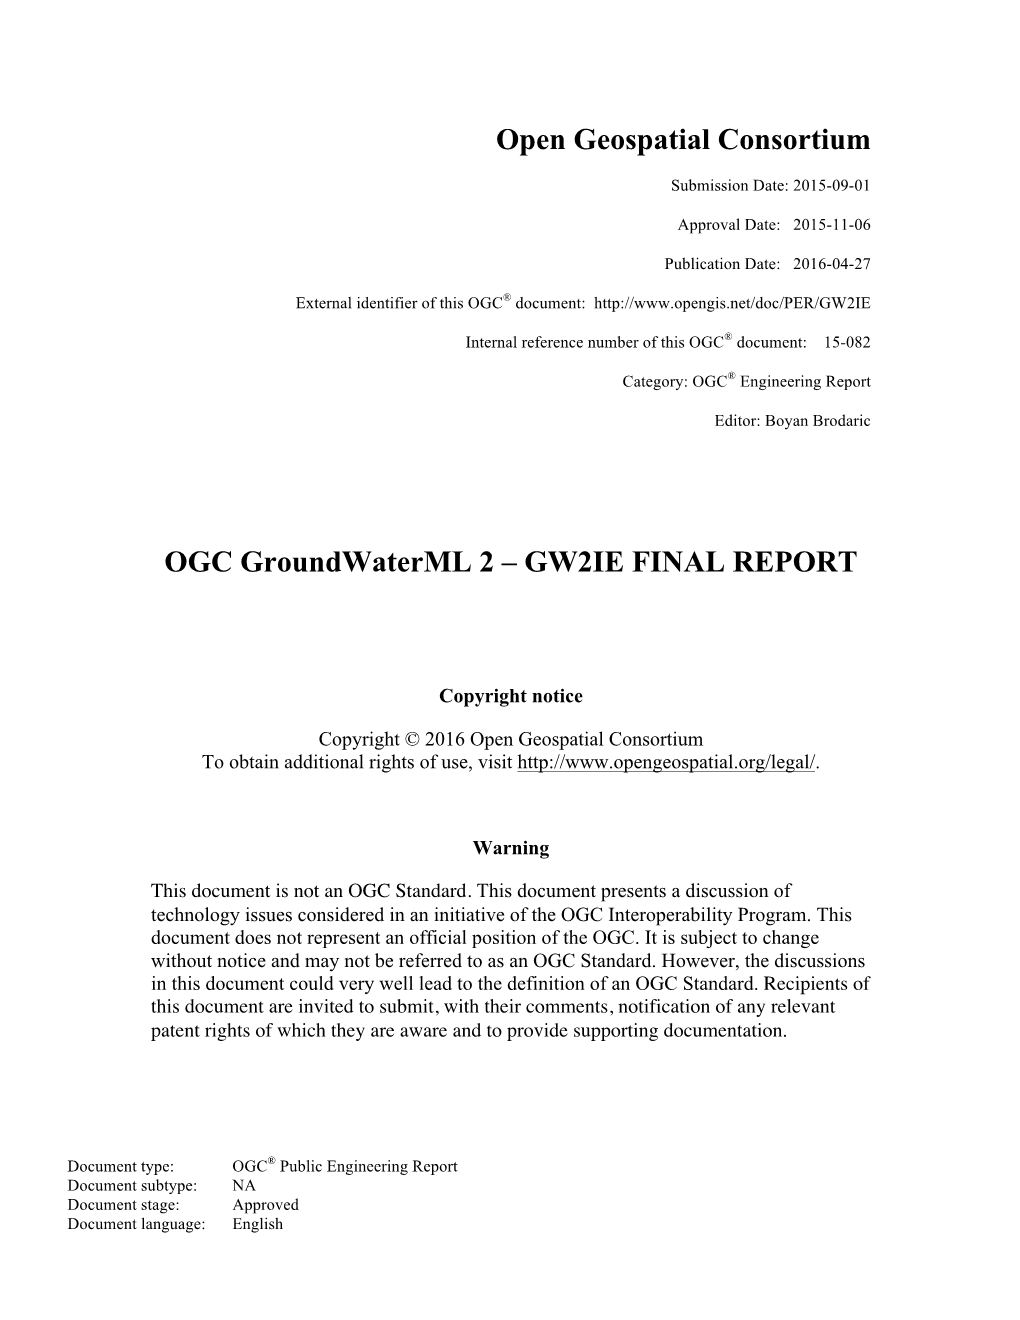 Open Geospatial Consortium OGC Groundwaterml 2